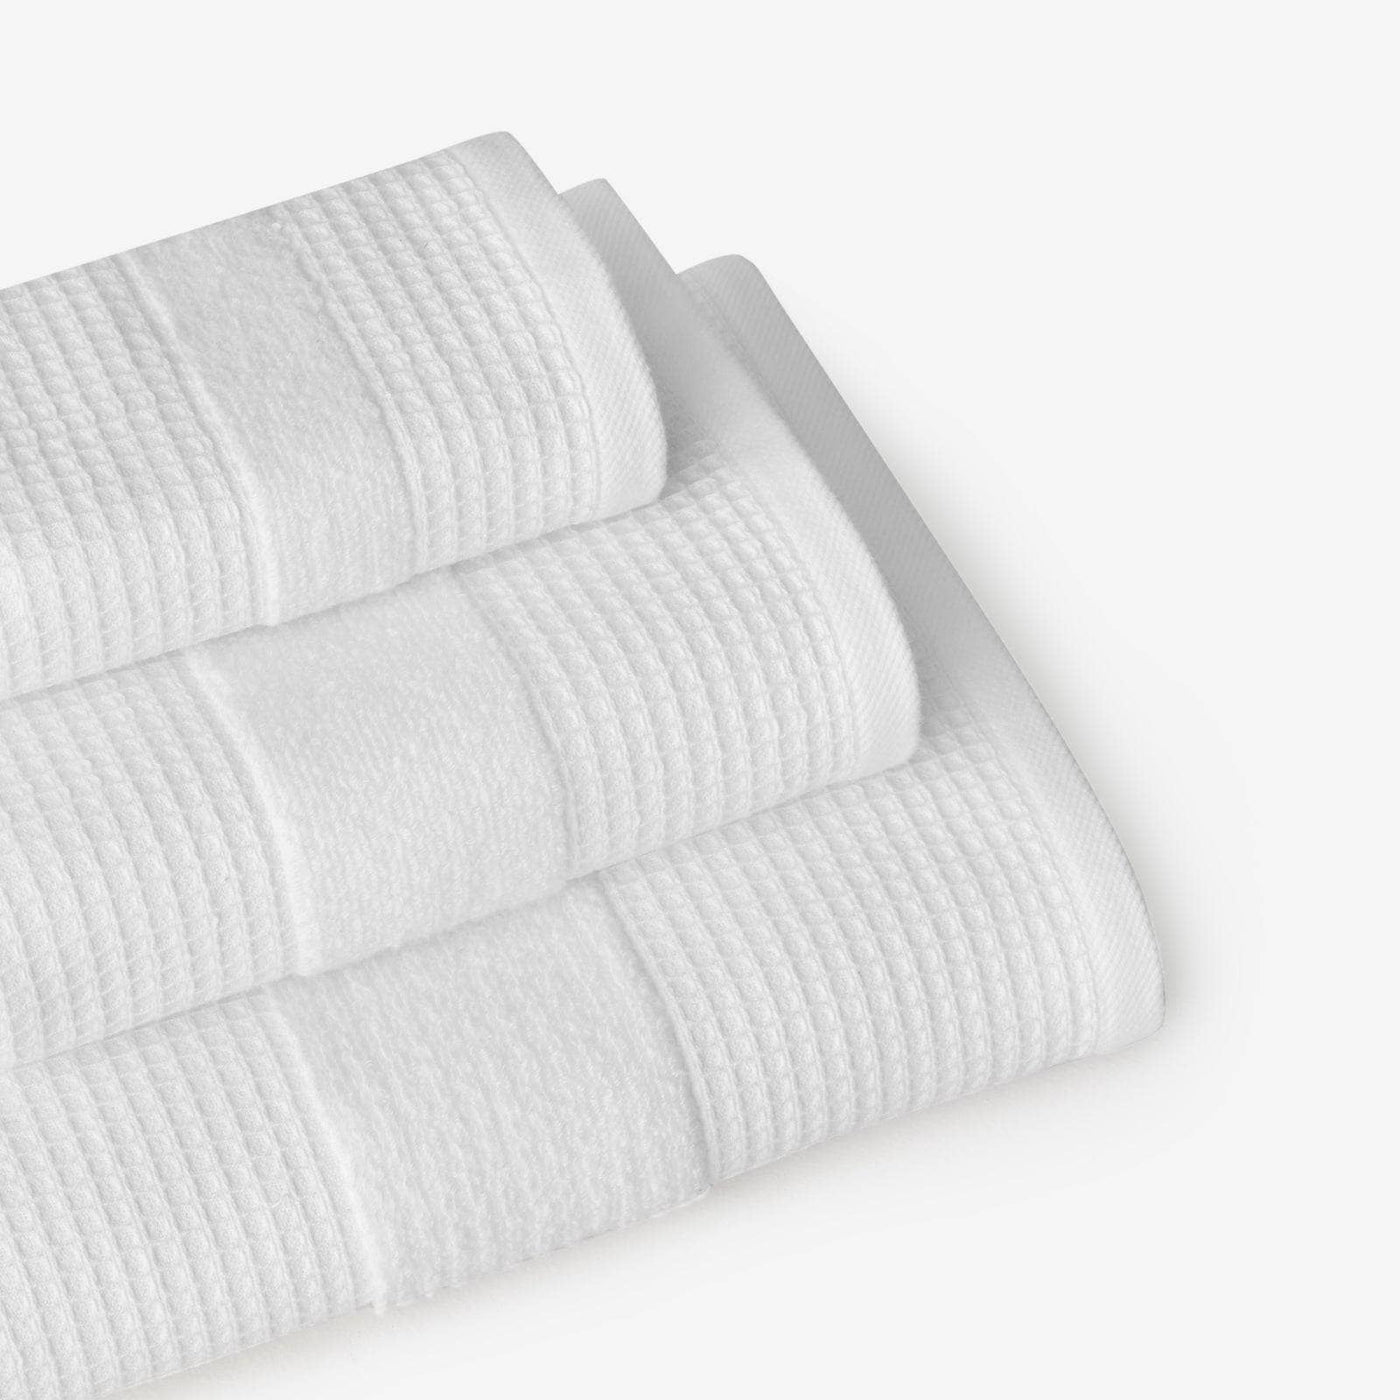 Airsense Waffle Set of 2 100% Turkish Cotton Hand Towel, White, 50x90 cm 4